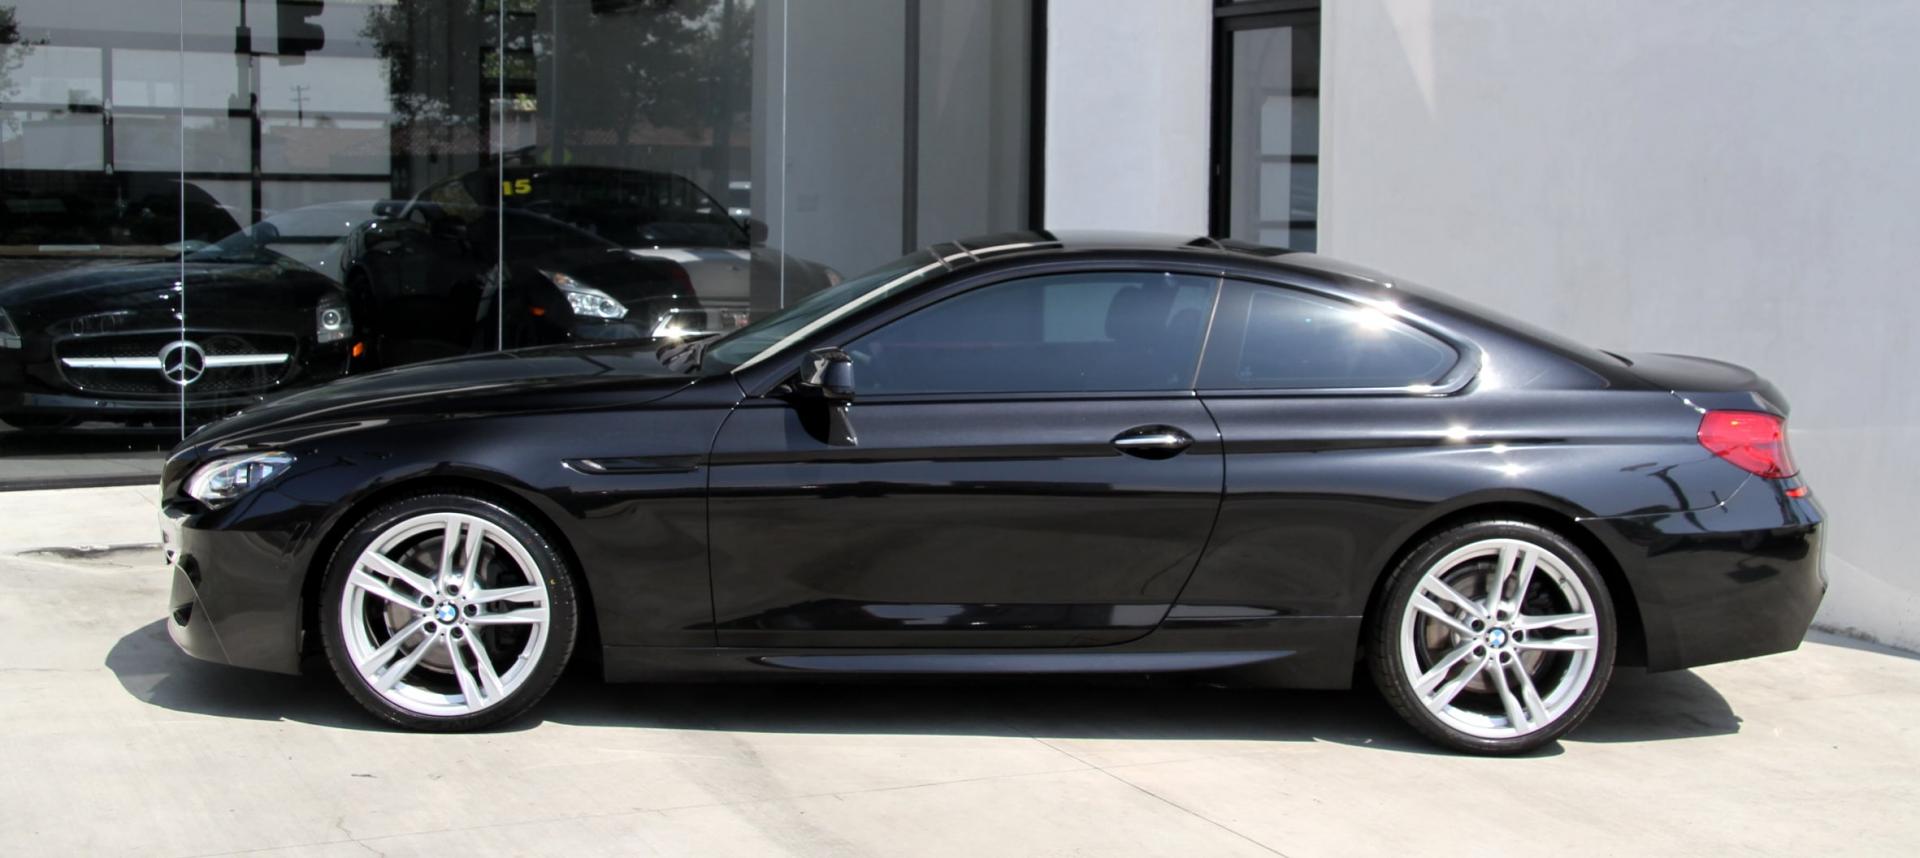 2014 BMW 640i ** M Sport Package ** Stock # 5771A for sale near Redondo  Beach, CA | CA BMW Dealer